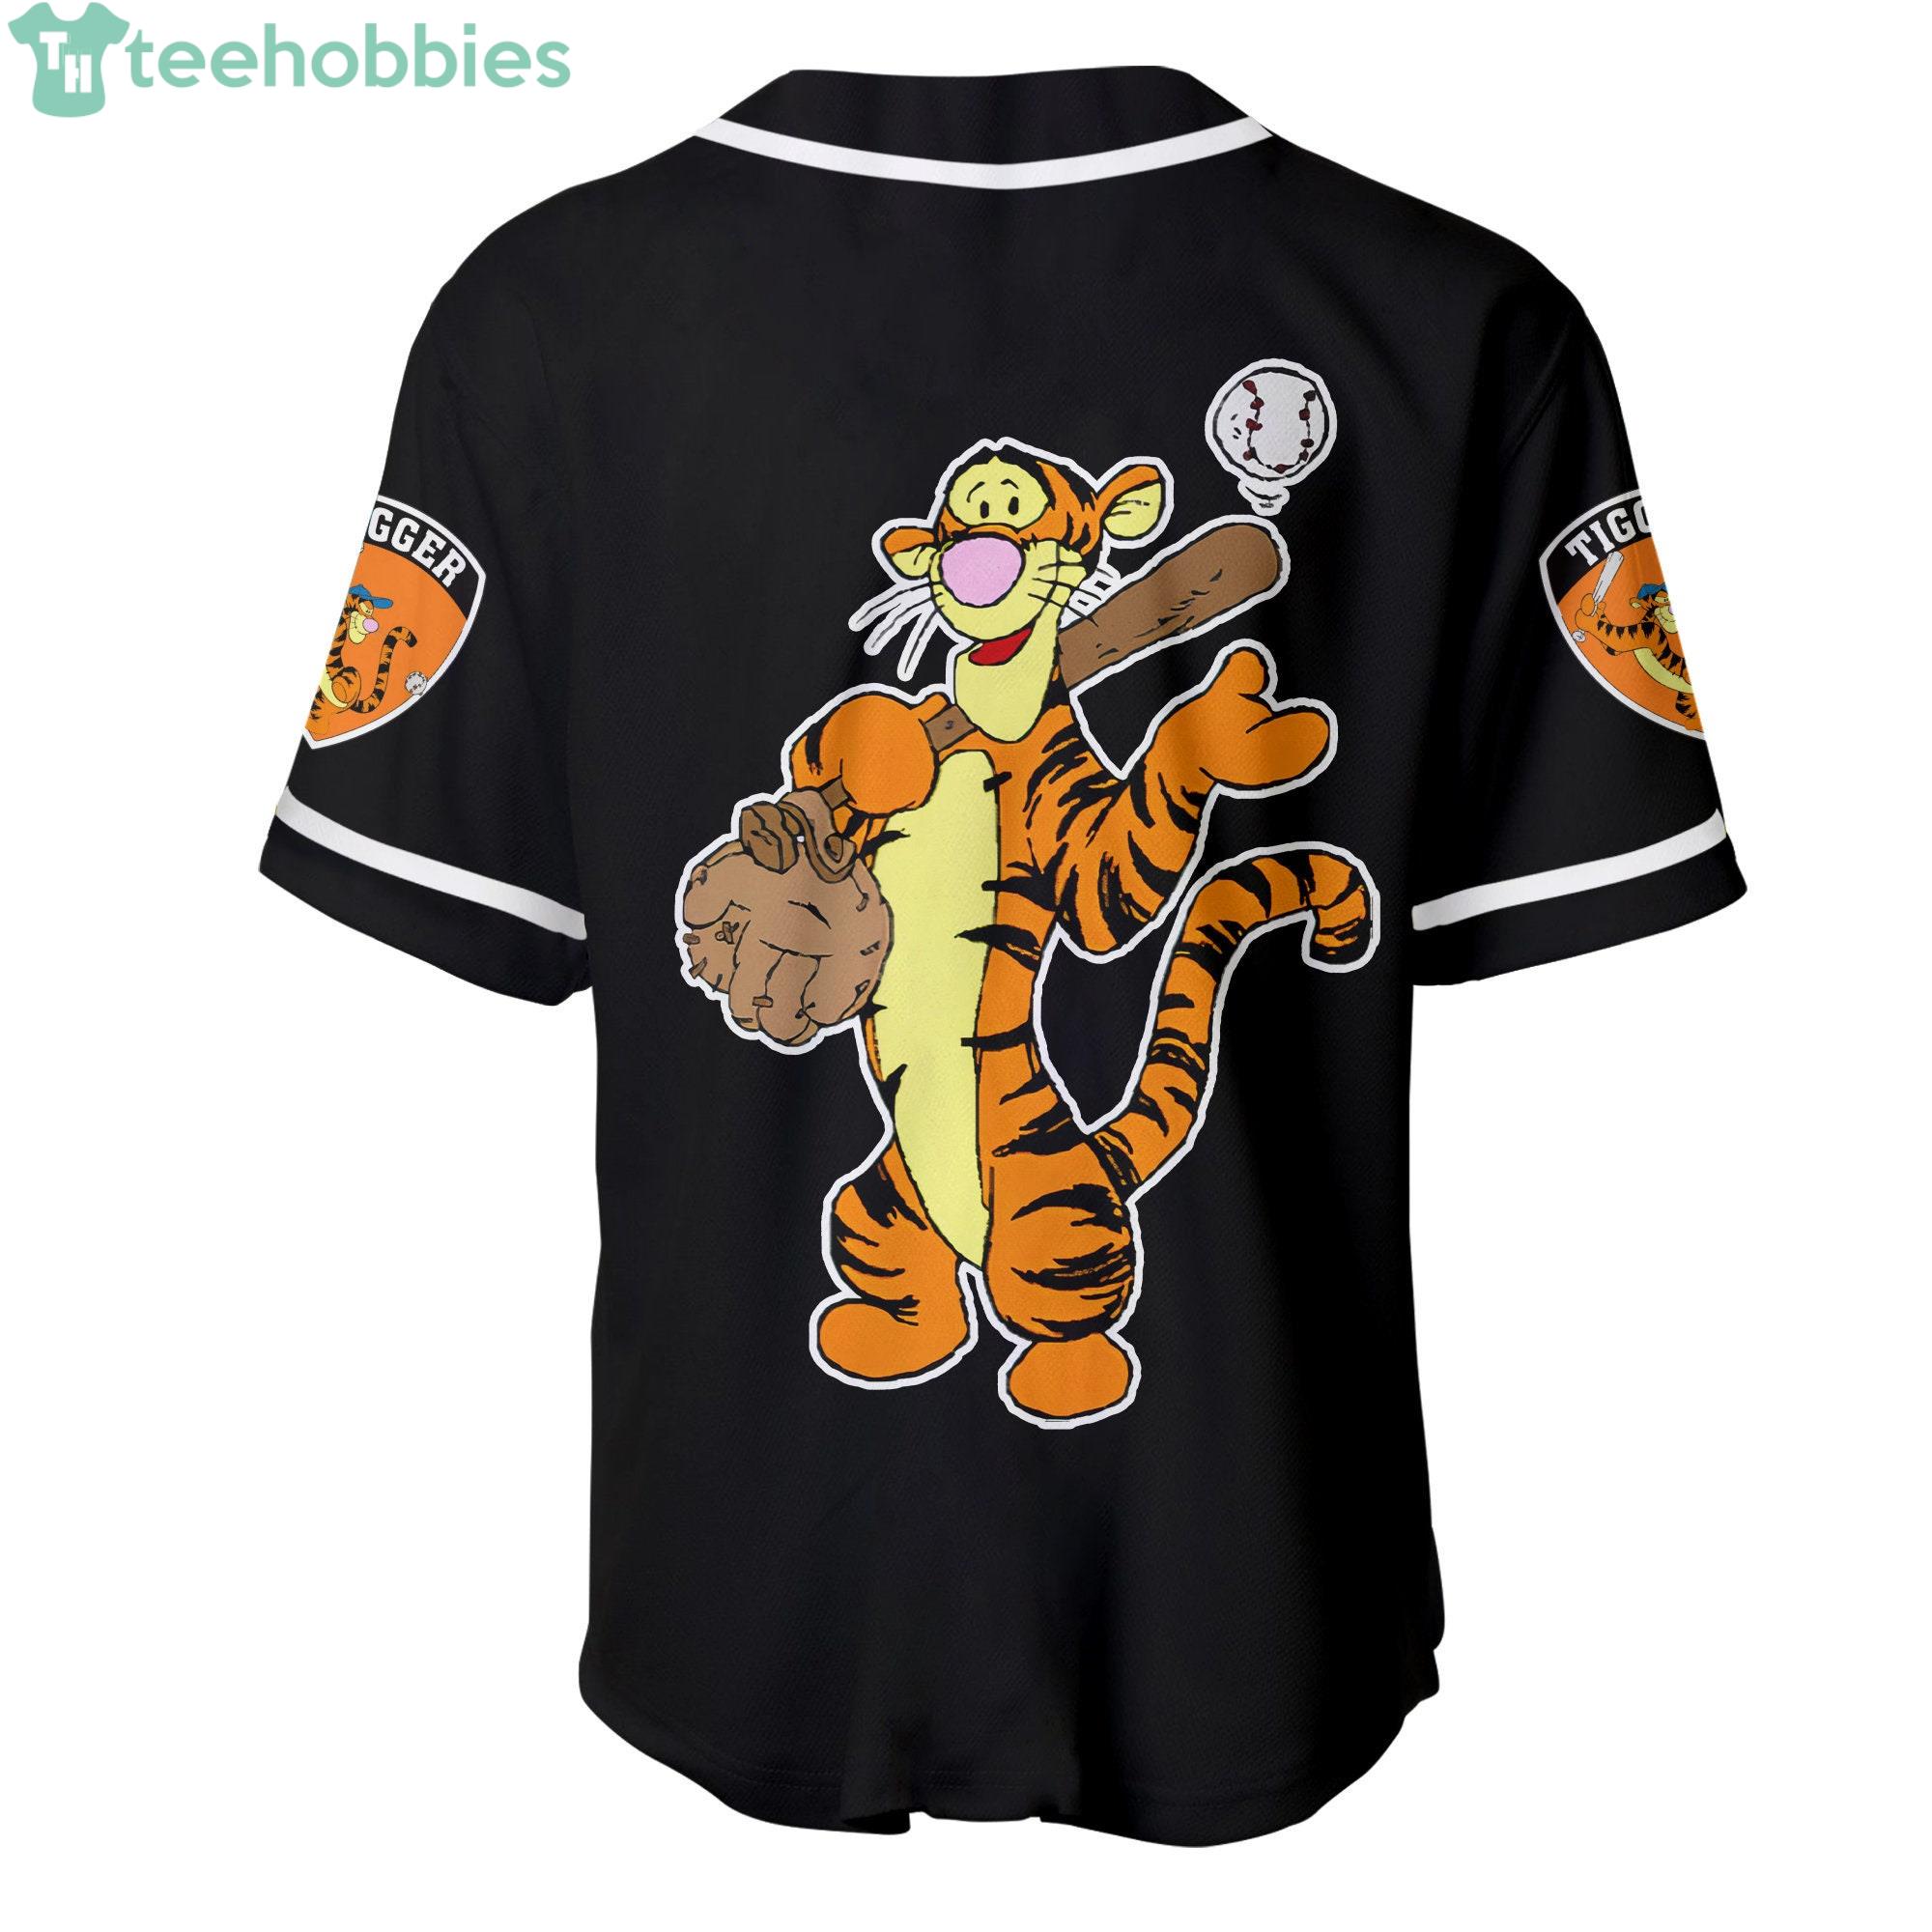 Tigger the Tiger Black Orange Disney Custom Baseball Jerseys For